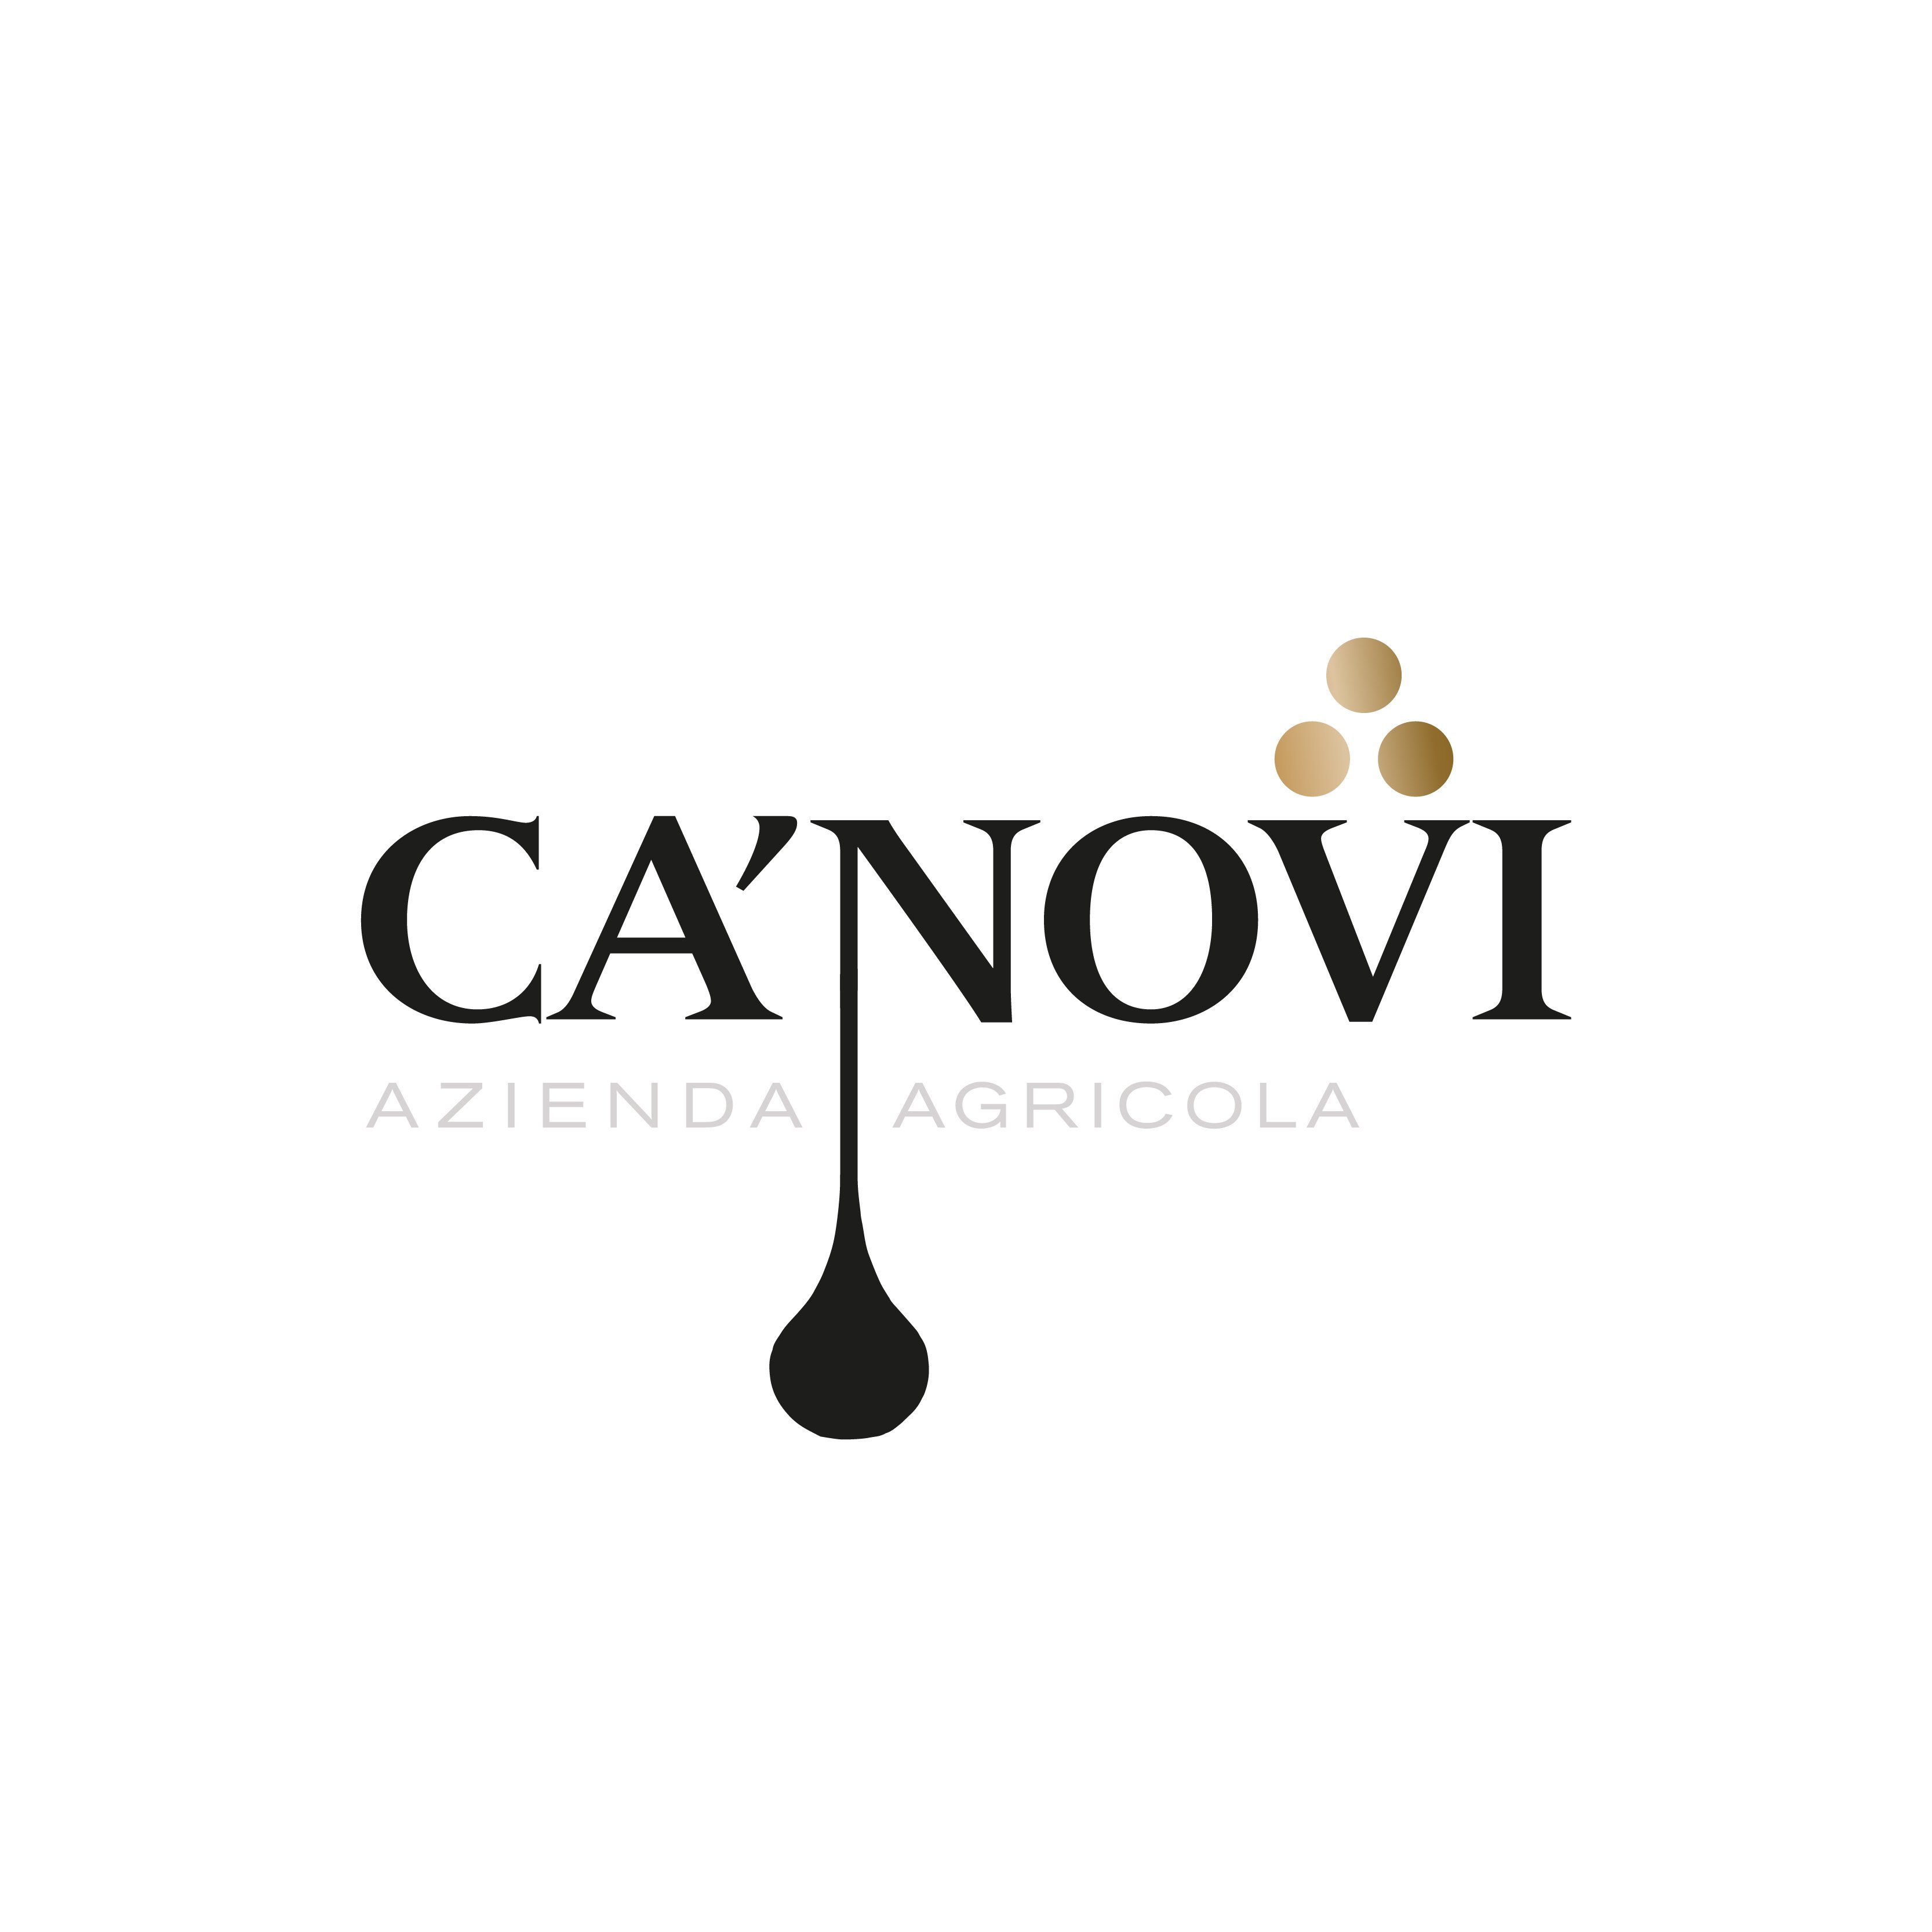 Logo Ca' Novi